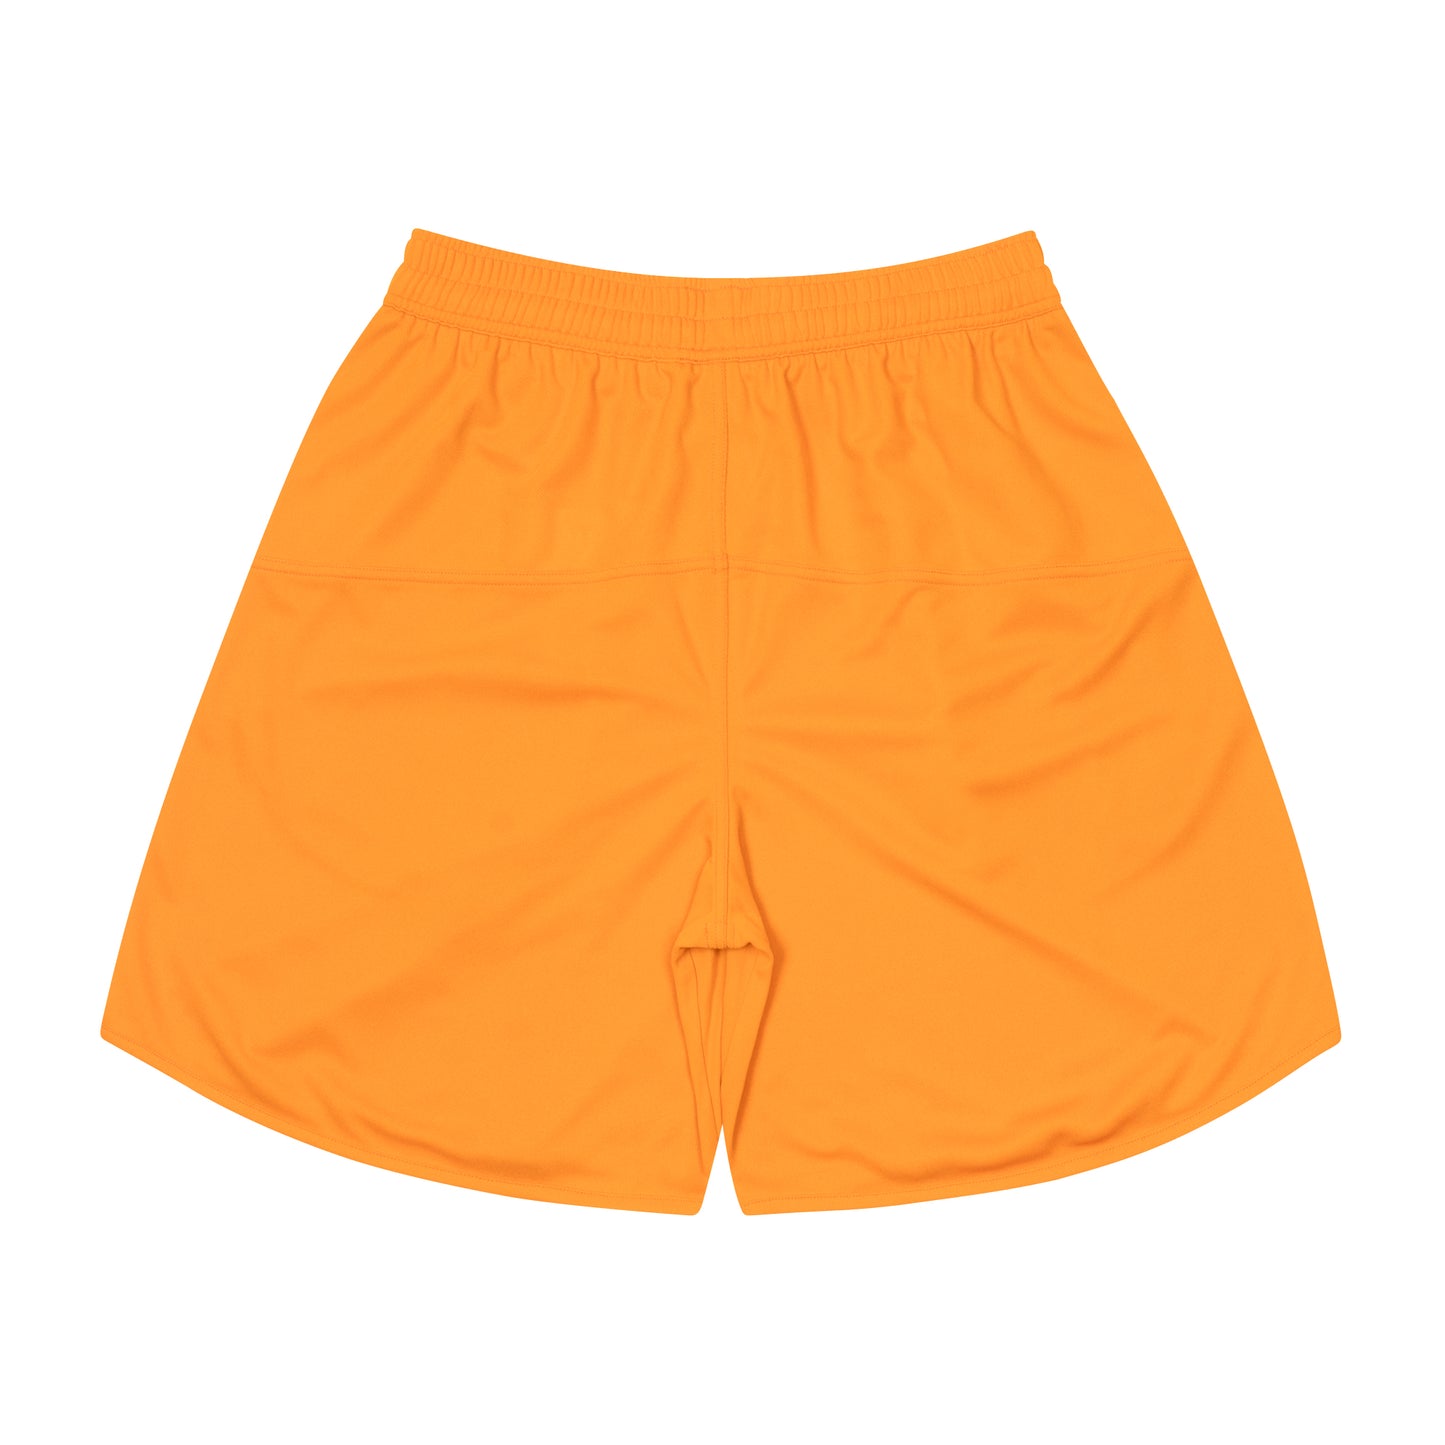 Basic Zip Shorts (tangerine orange/off white)